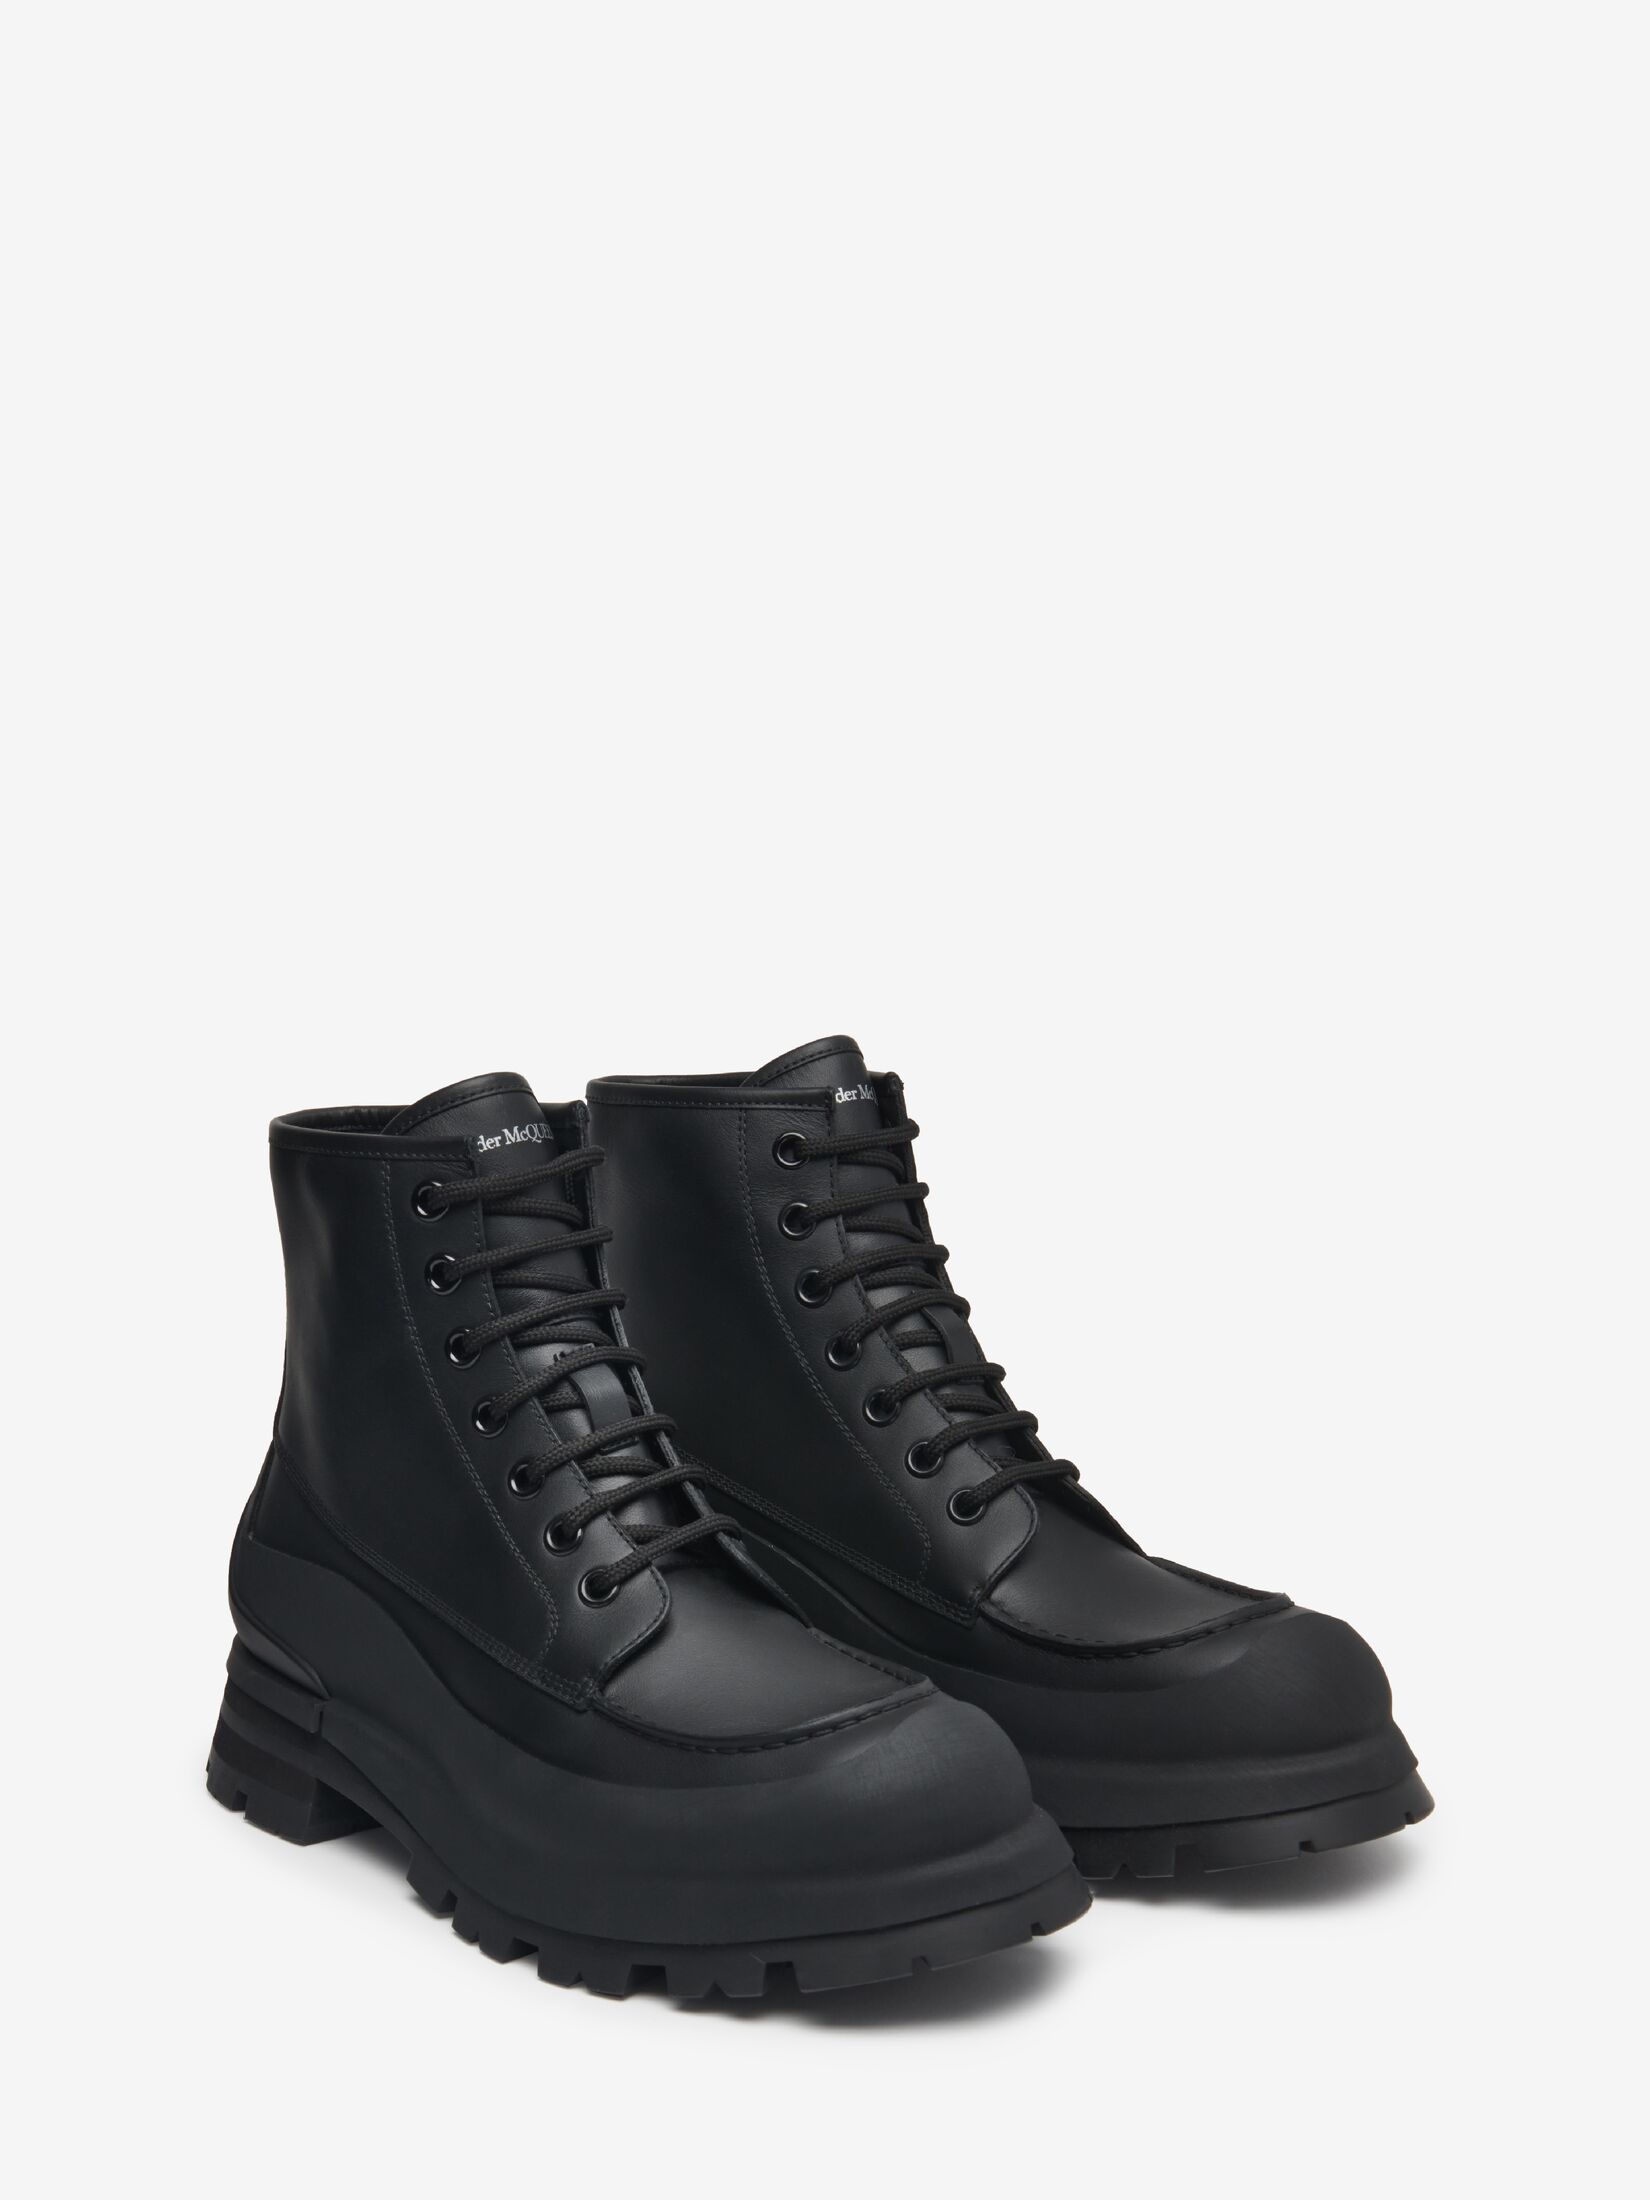 Wander Lace Up Boot in Black | Alexander McQueen GB